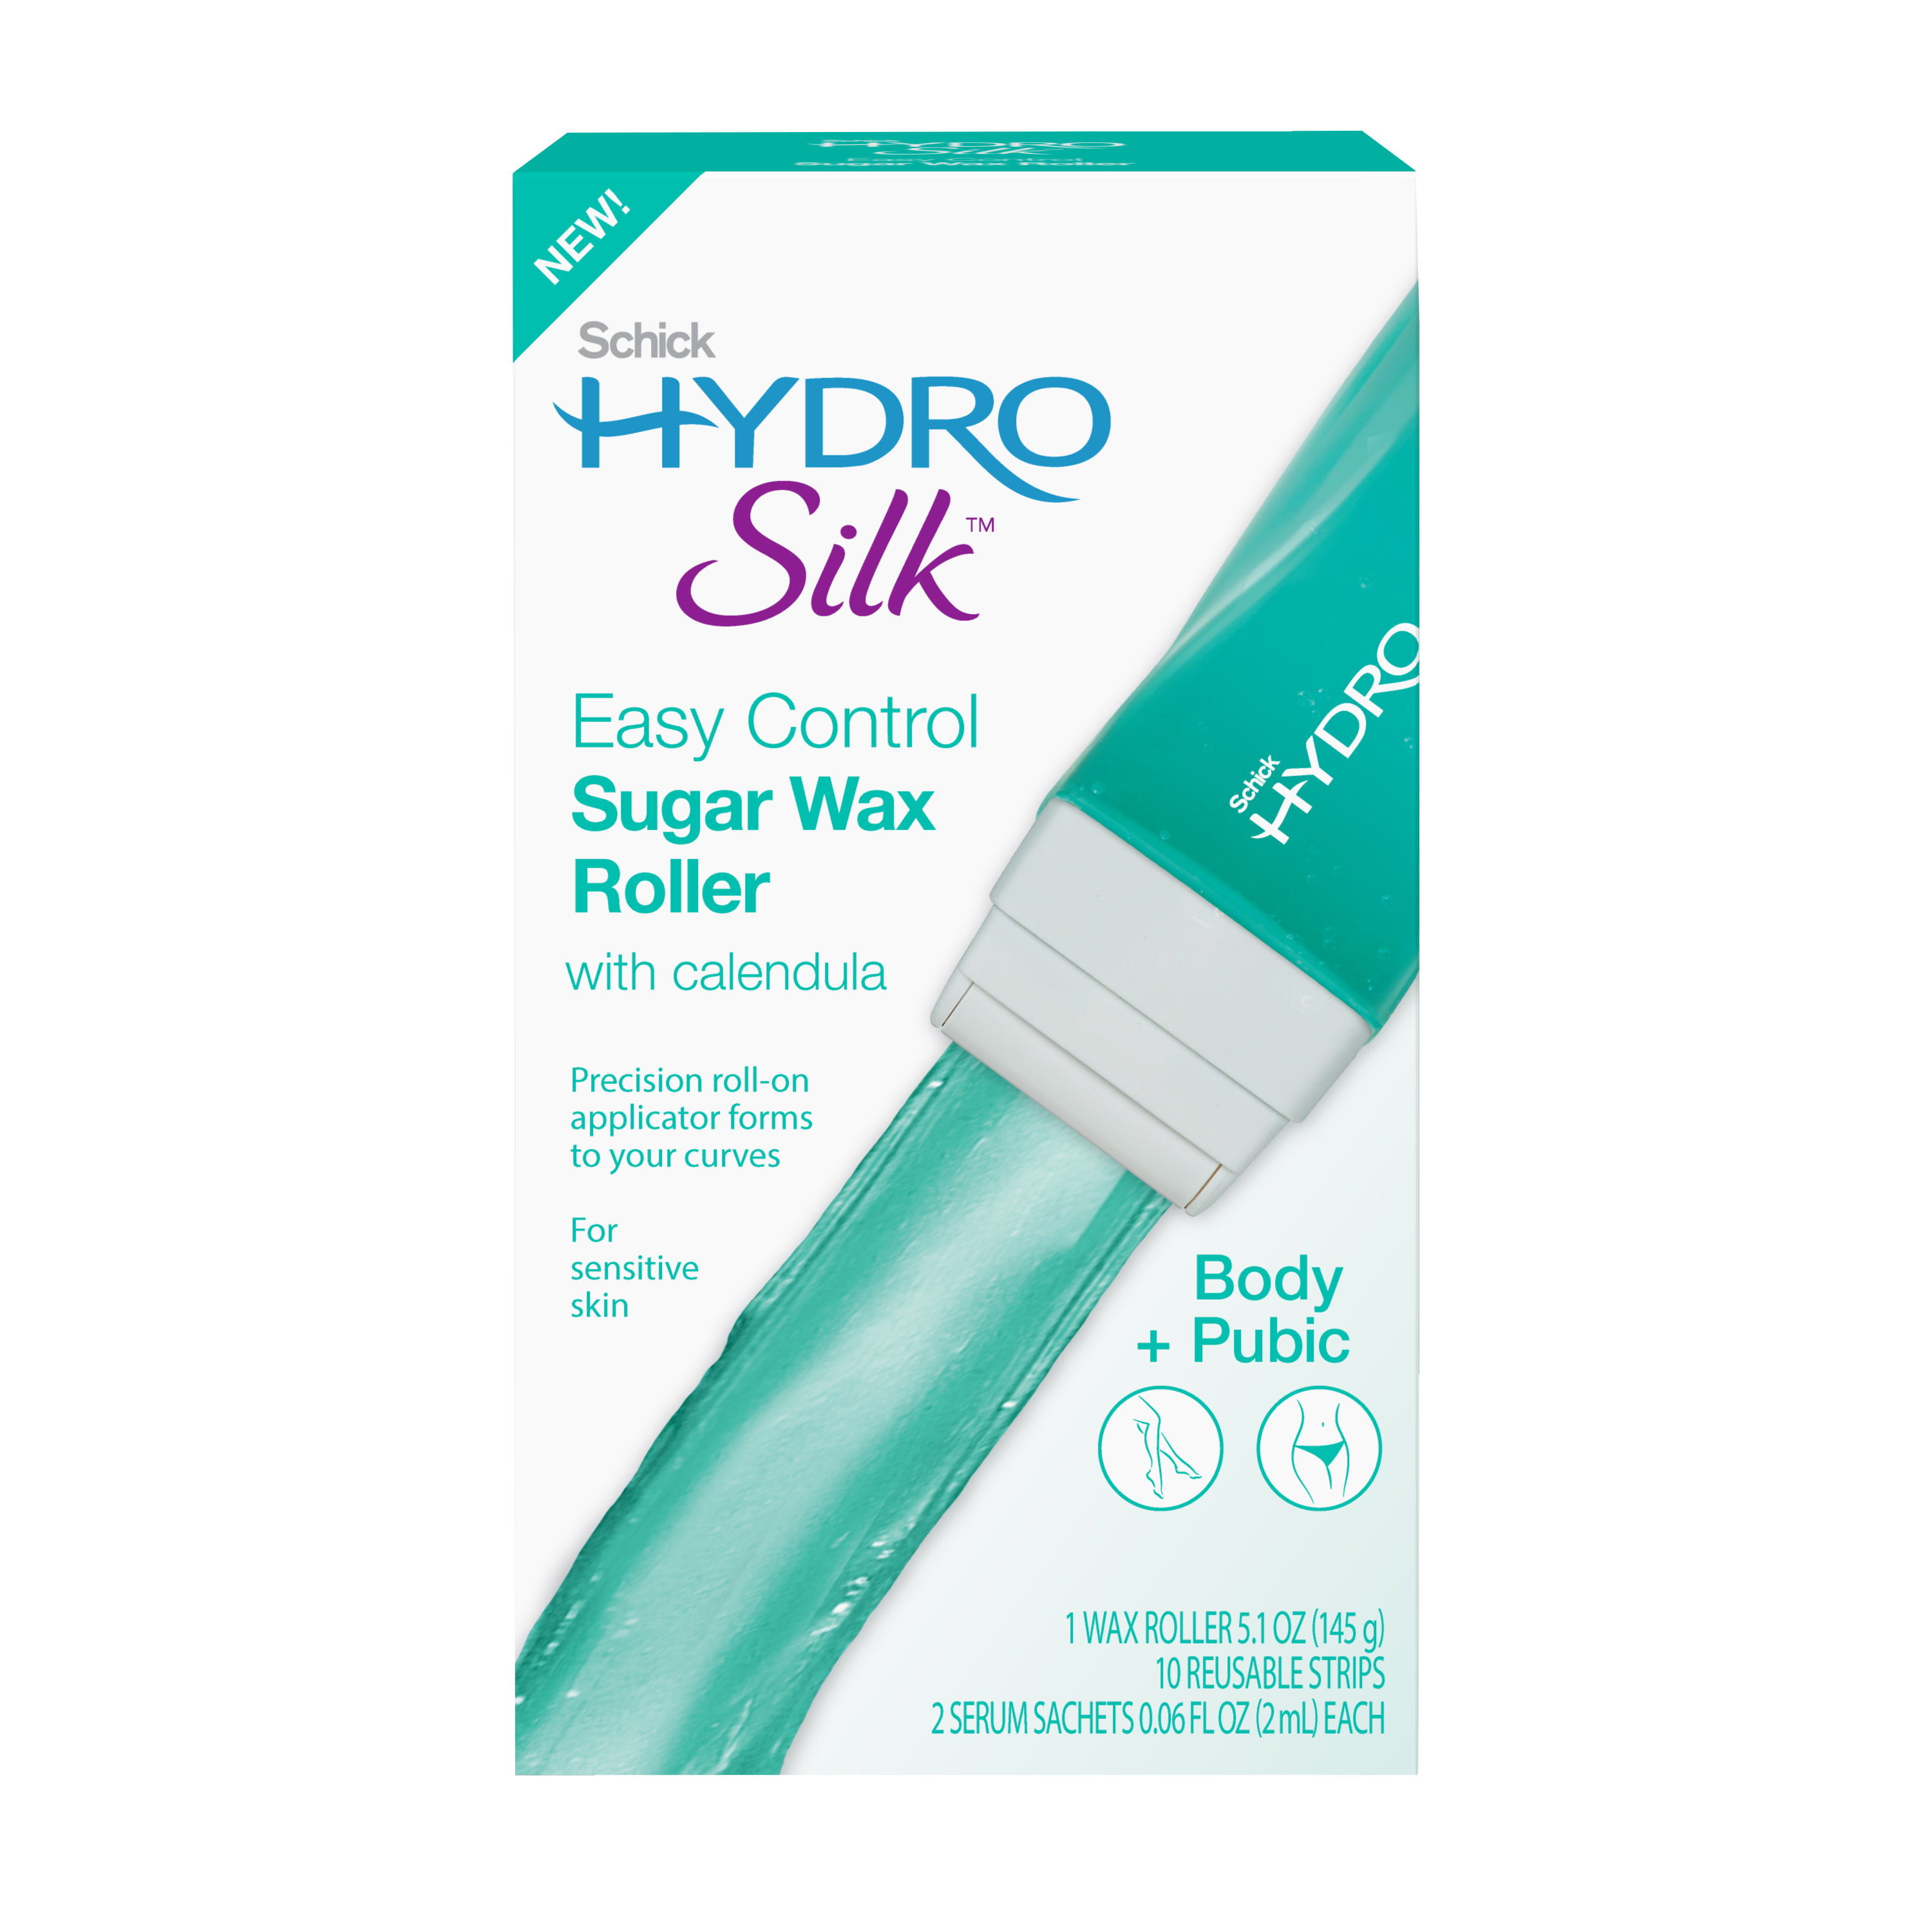 Schick Hydro Silk Sugar Wax Kit for Women